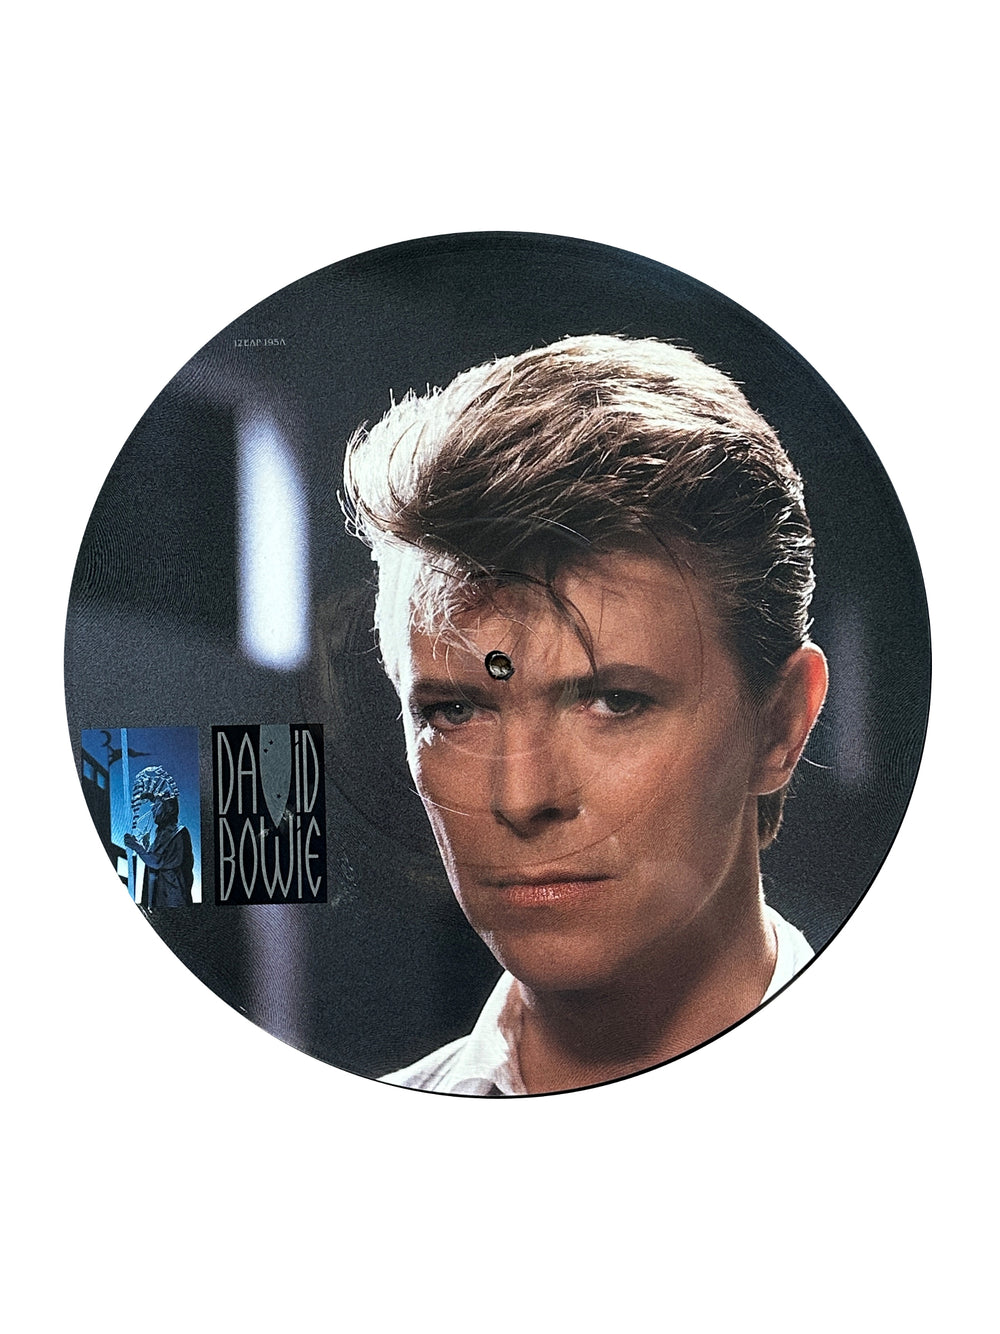 David Bowie - Loving The Alien 12" Vinyl UK Picture Disc Preloved:1985